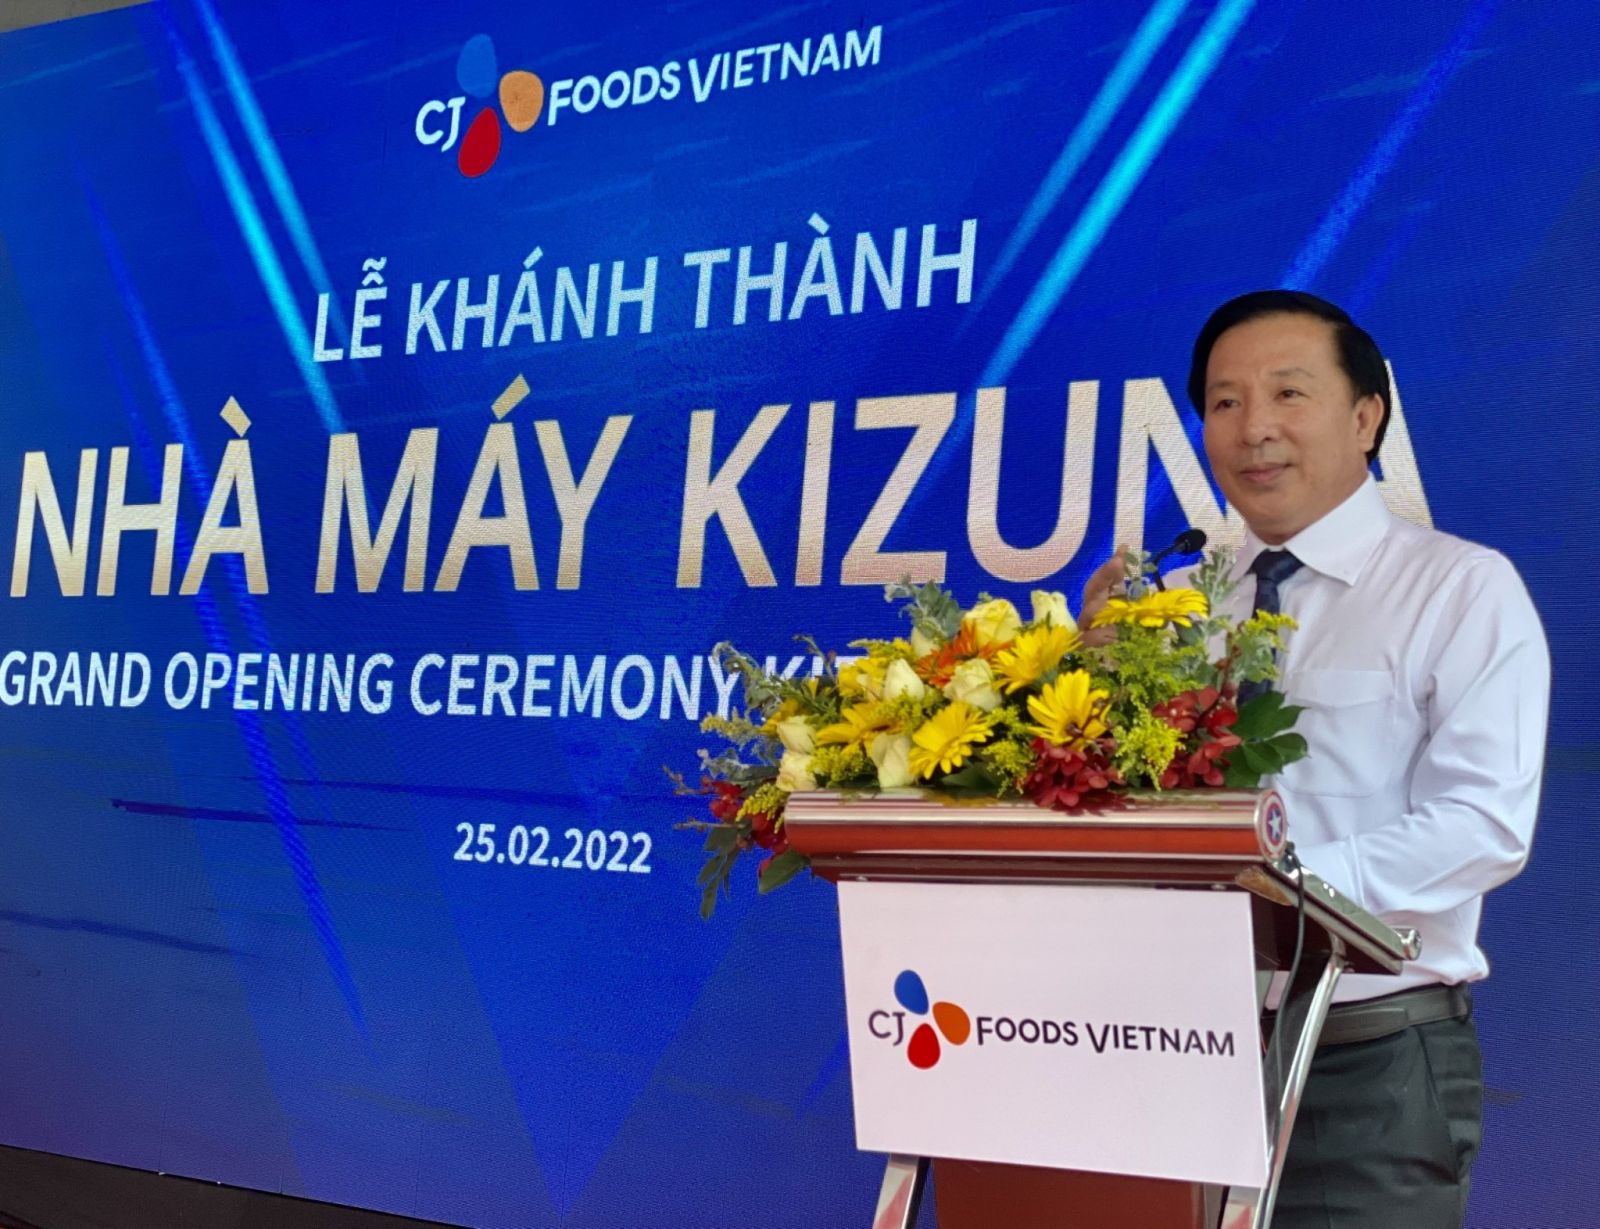 Deputy Secretary of the Provincial Party Committee, Chairman of the Provincial People's Committee - Nguyen Van Ut speaks at the inauguration ceremony of CJ Foods Vietnam Factory - Kizuna 3